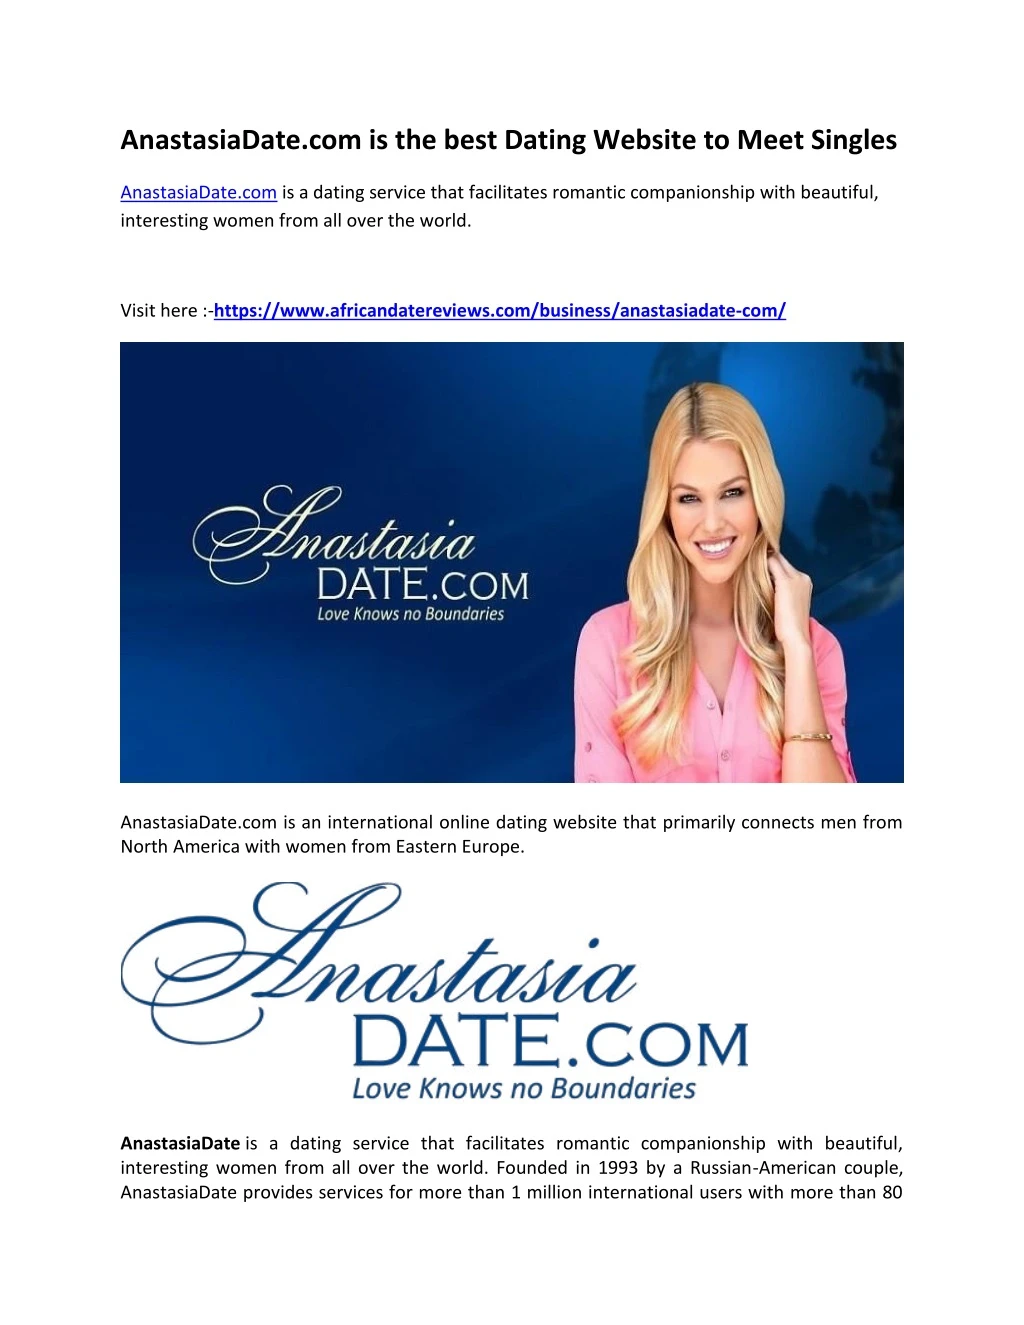 anastasiadate com is the best dating website